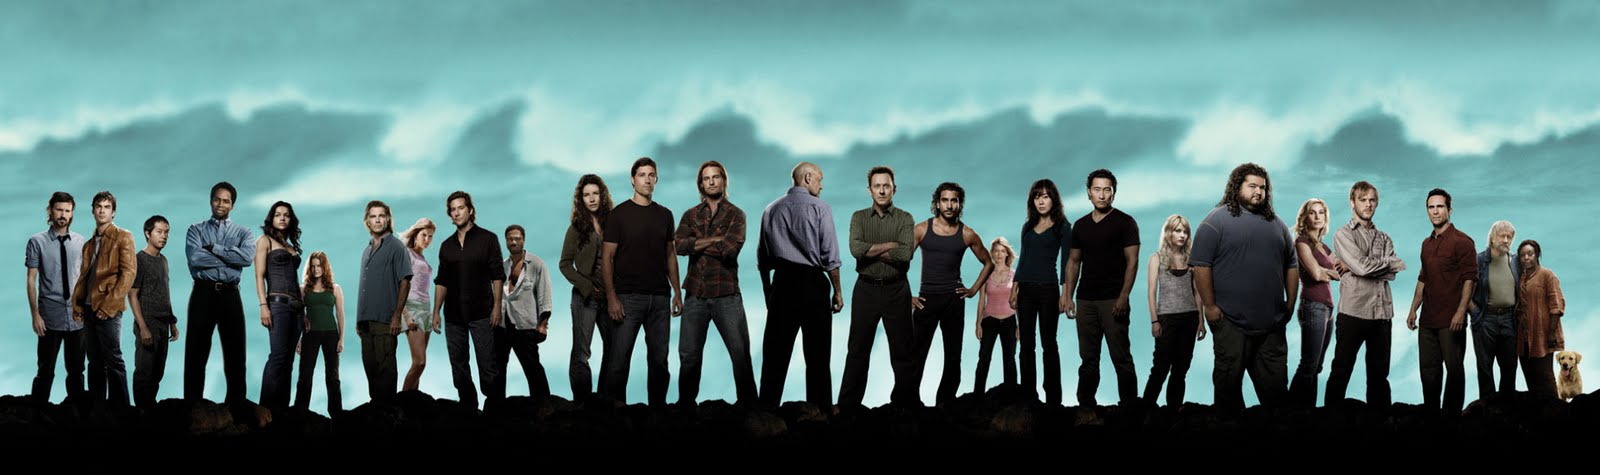 Lost-complete-series-cast1.jpg